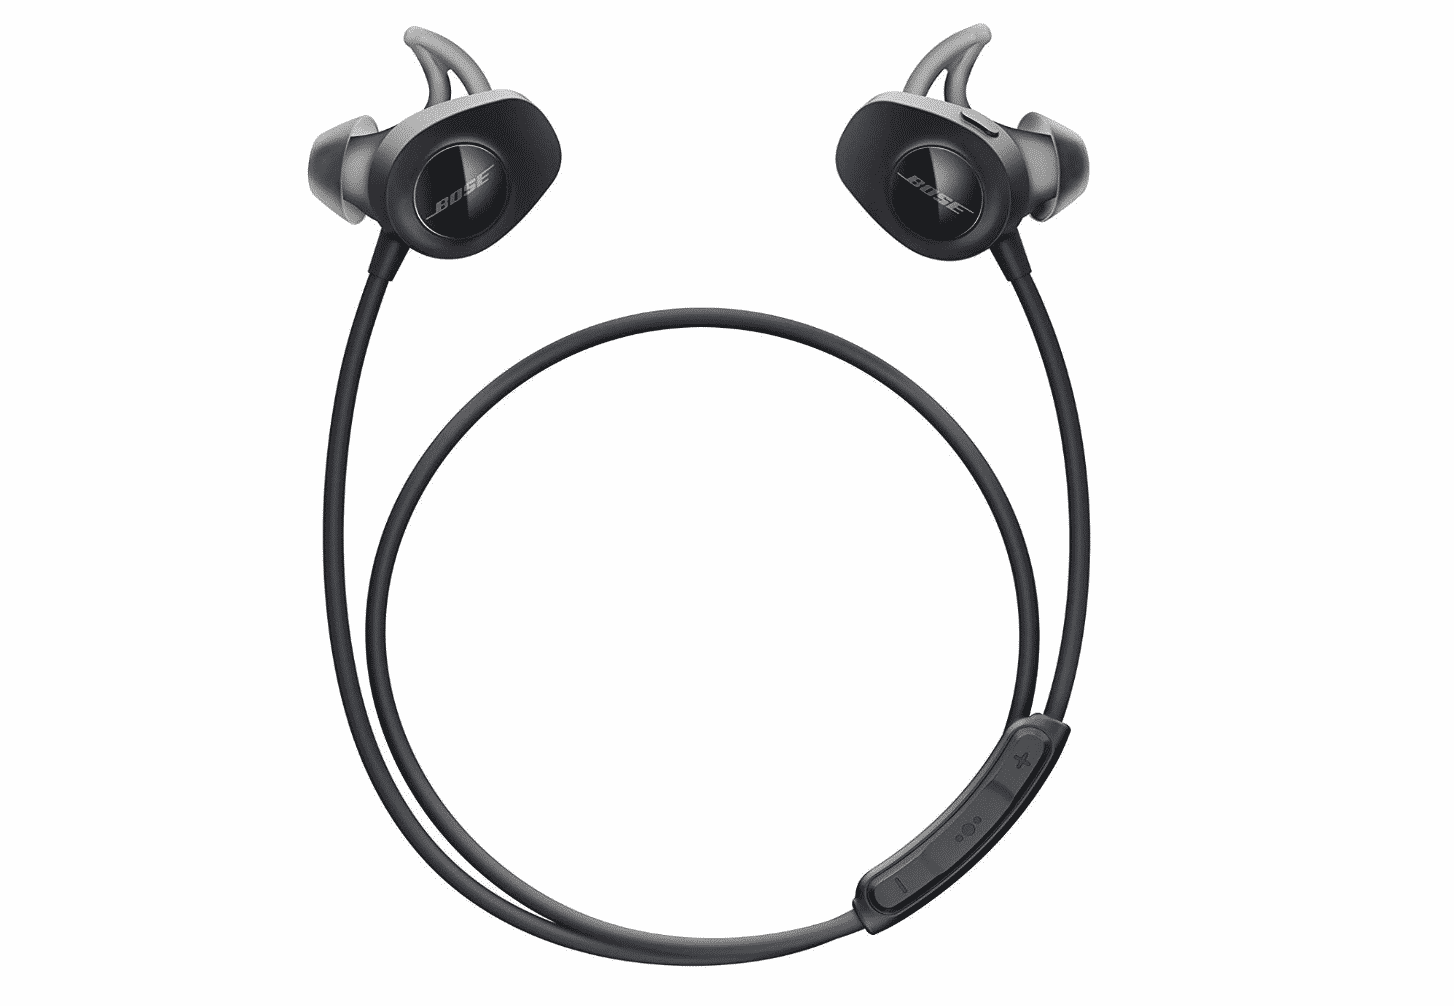 Bose SoundSport Wireless Headphones Drop to $99